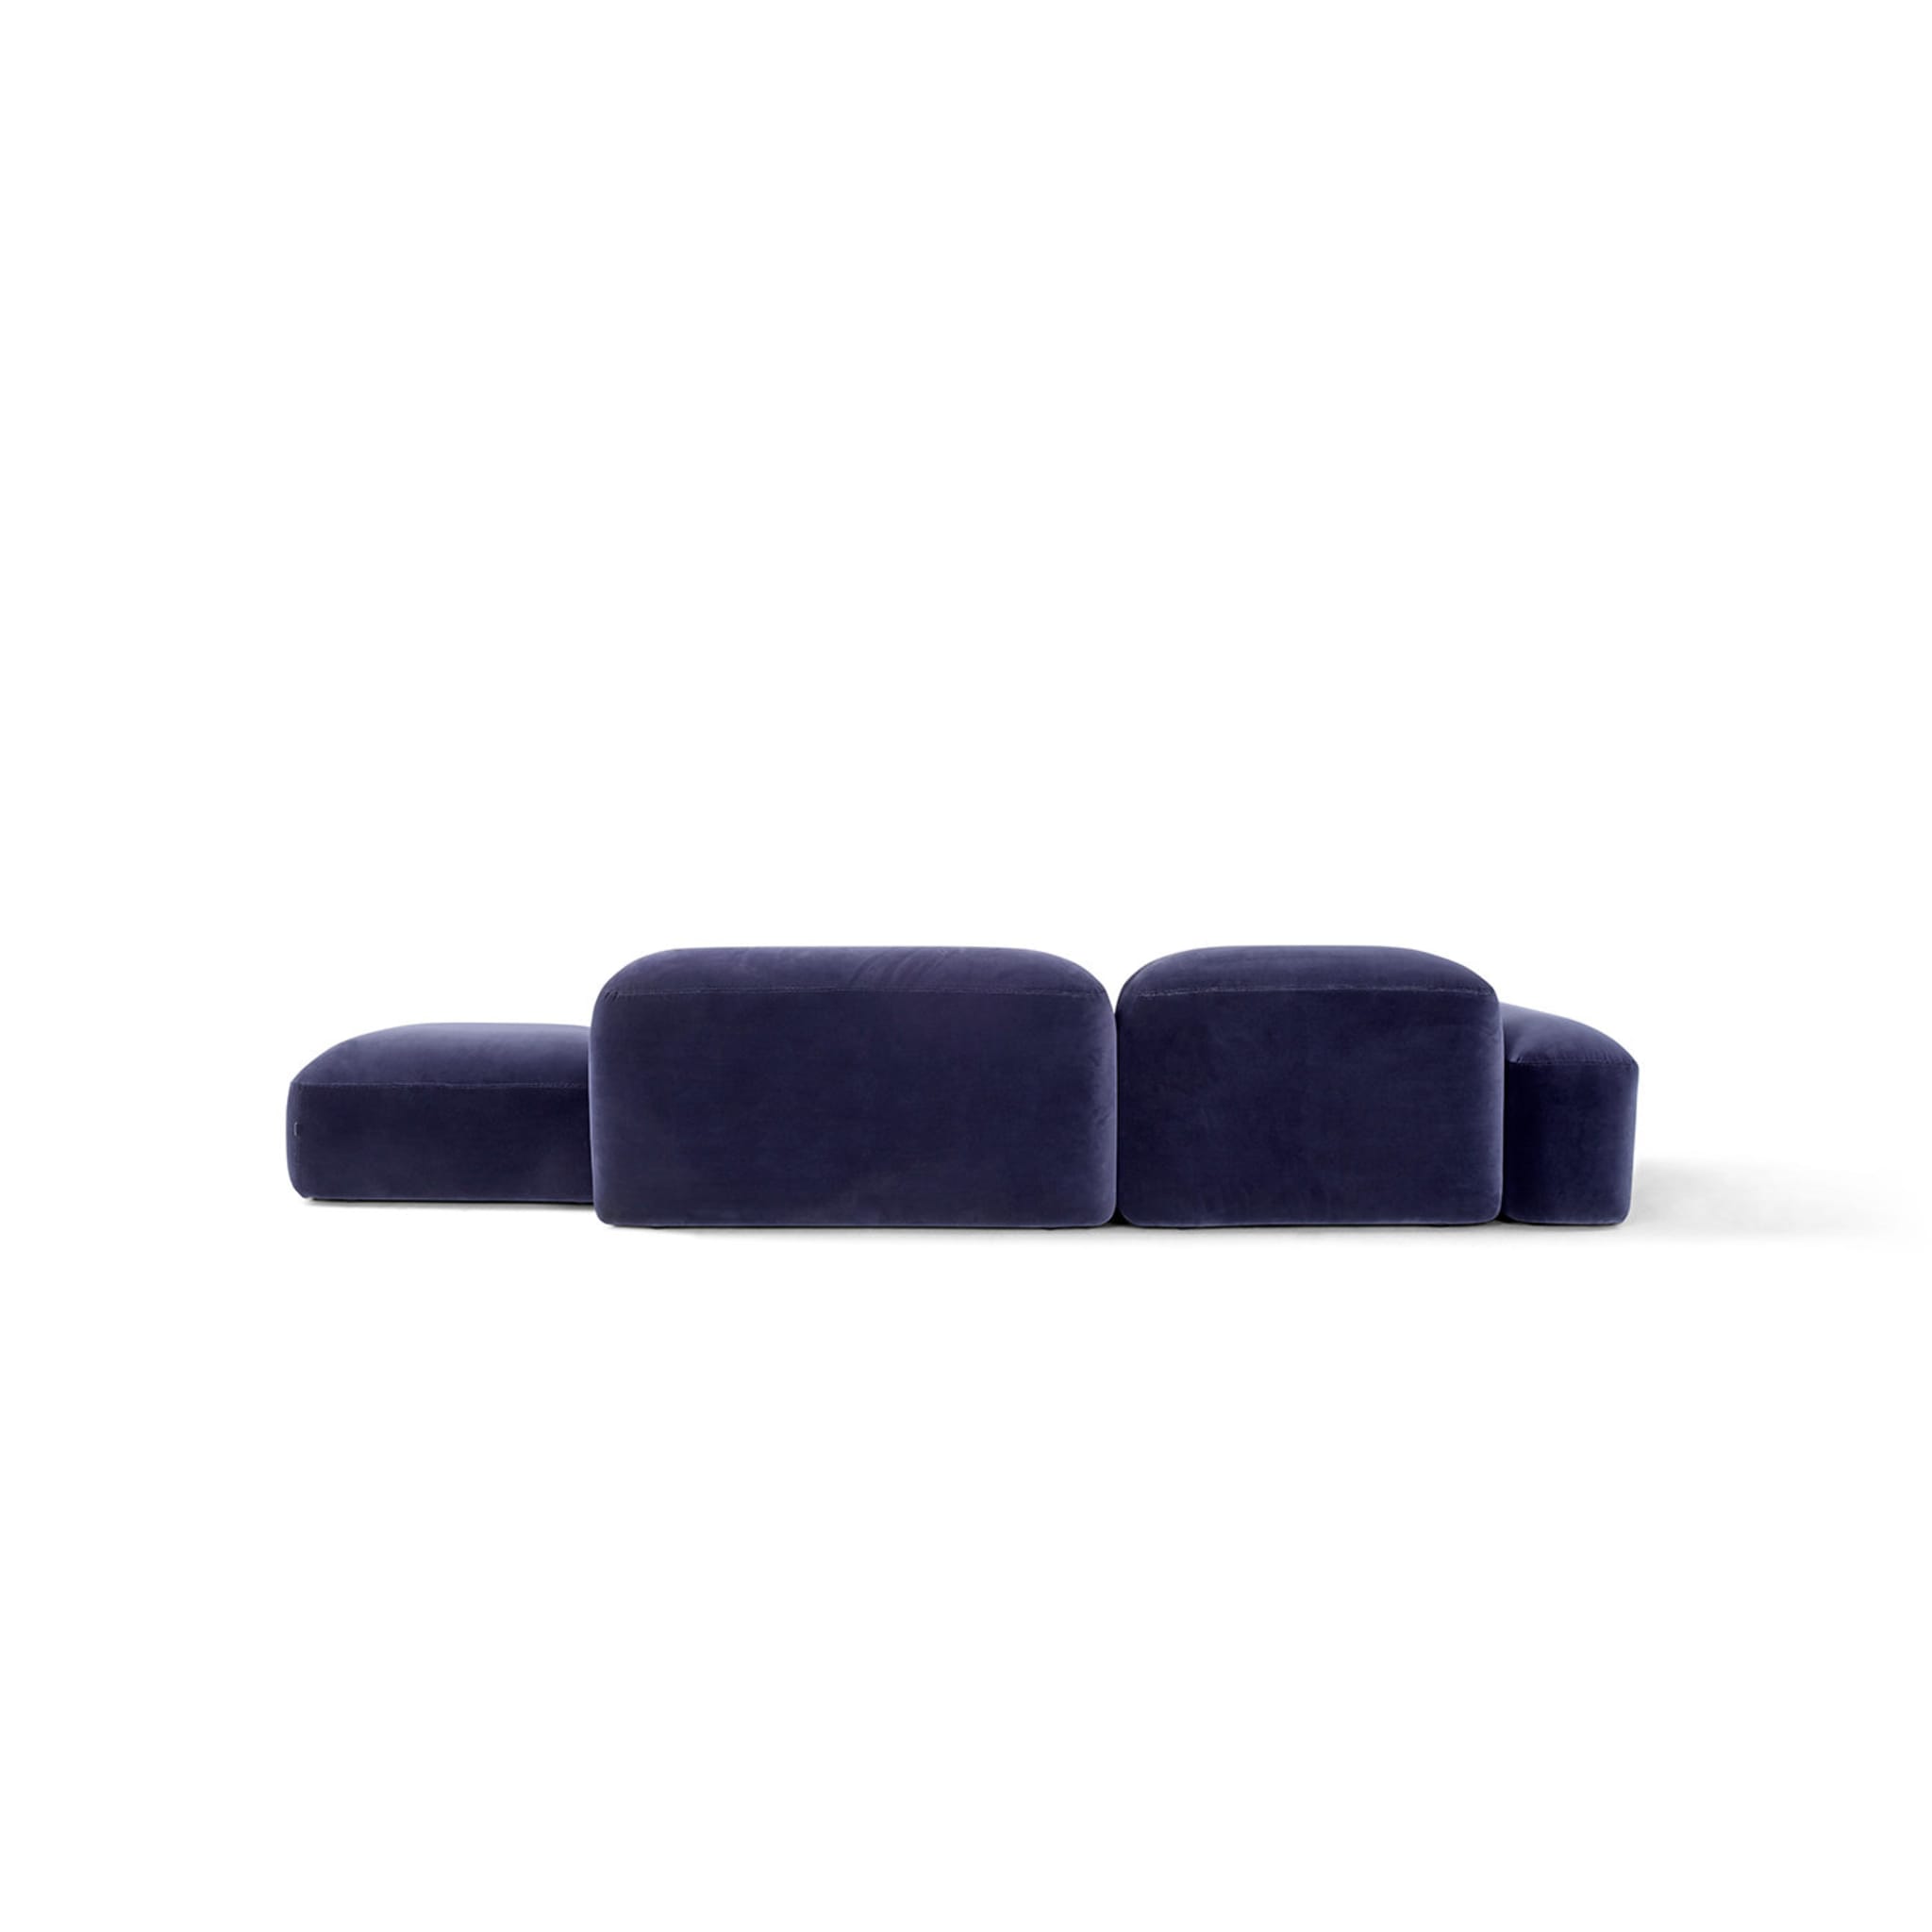  Lapis Blue Sofa by Emanuel Gargano and Anton Cristell - Alternative view 3